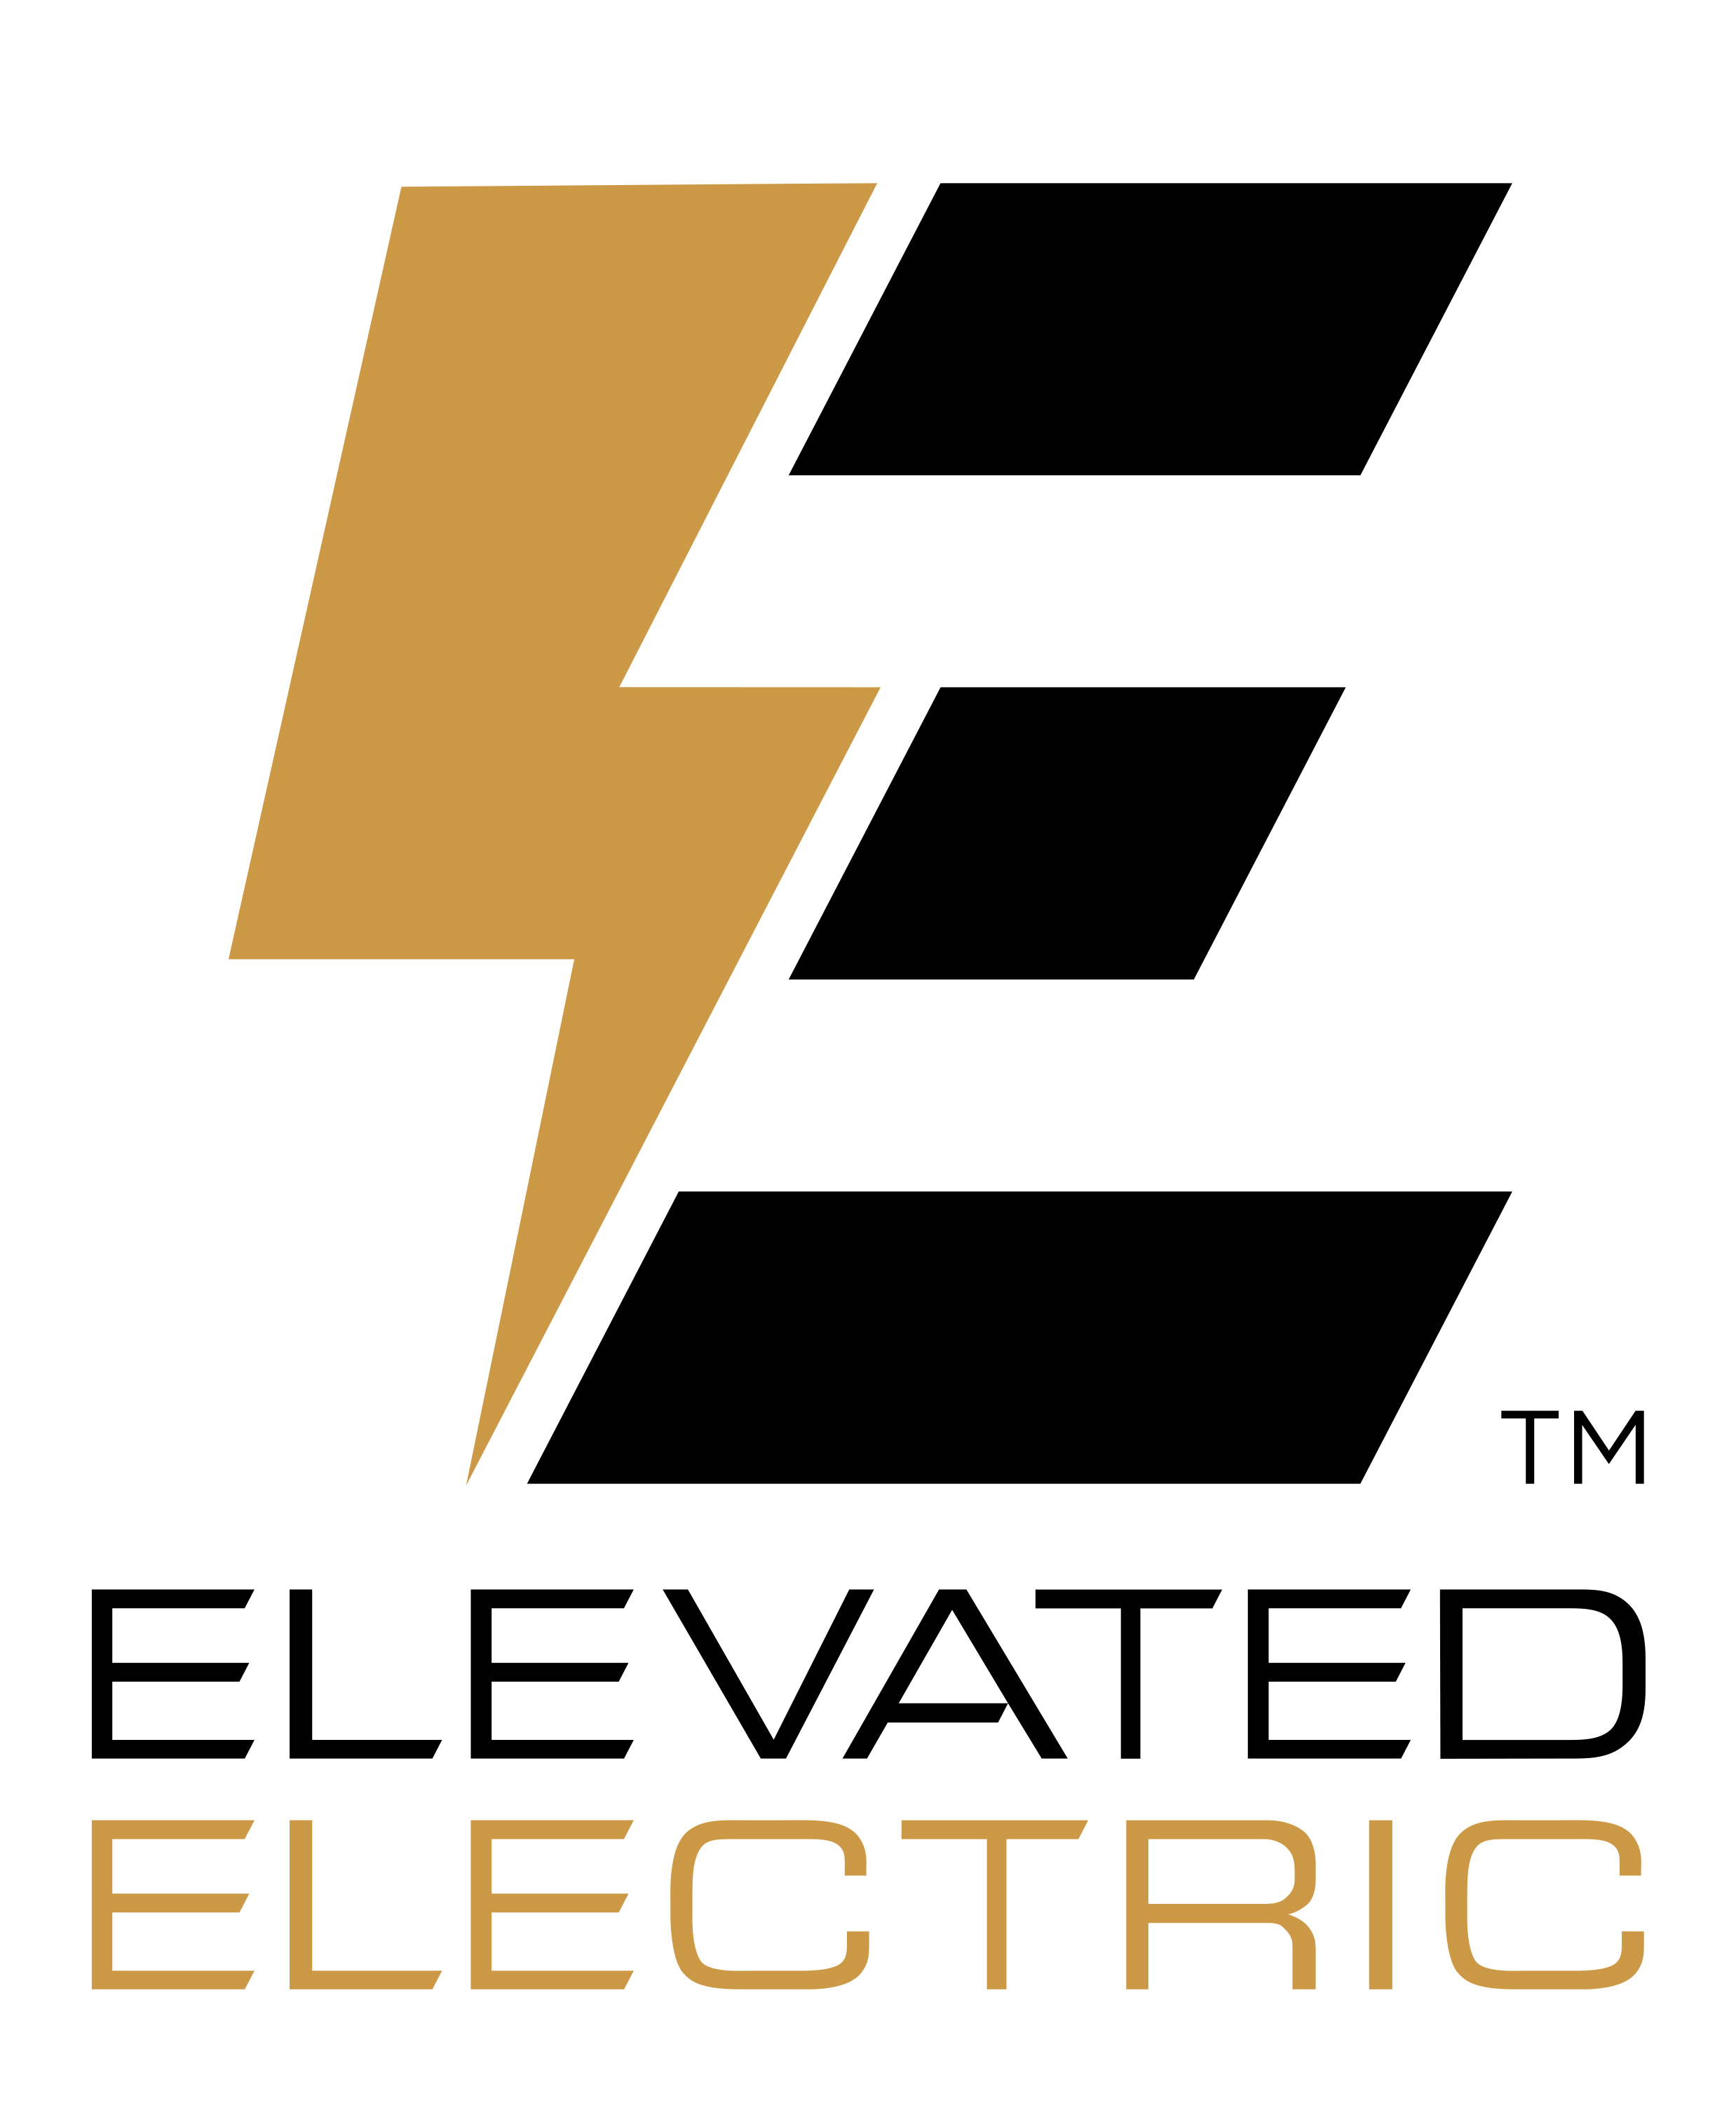 Elevated Electric Inc Logo